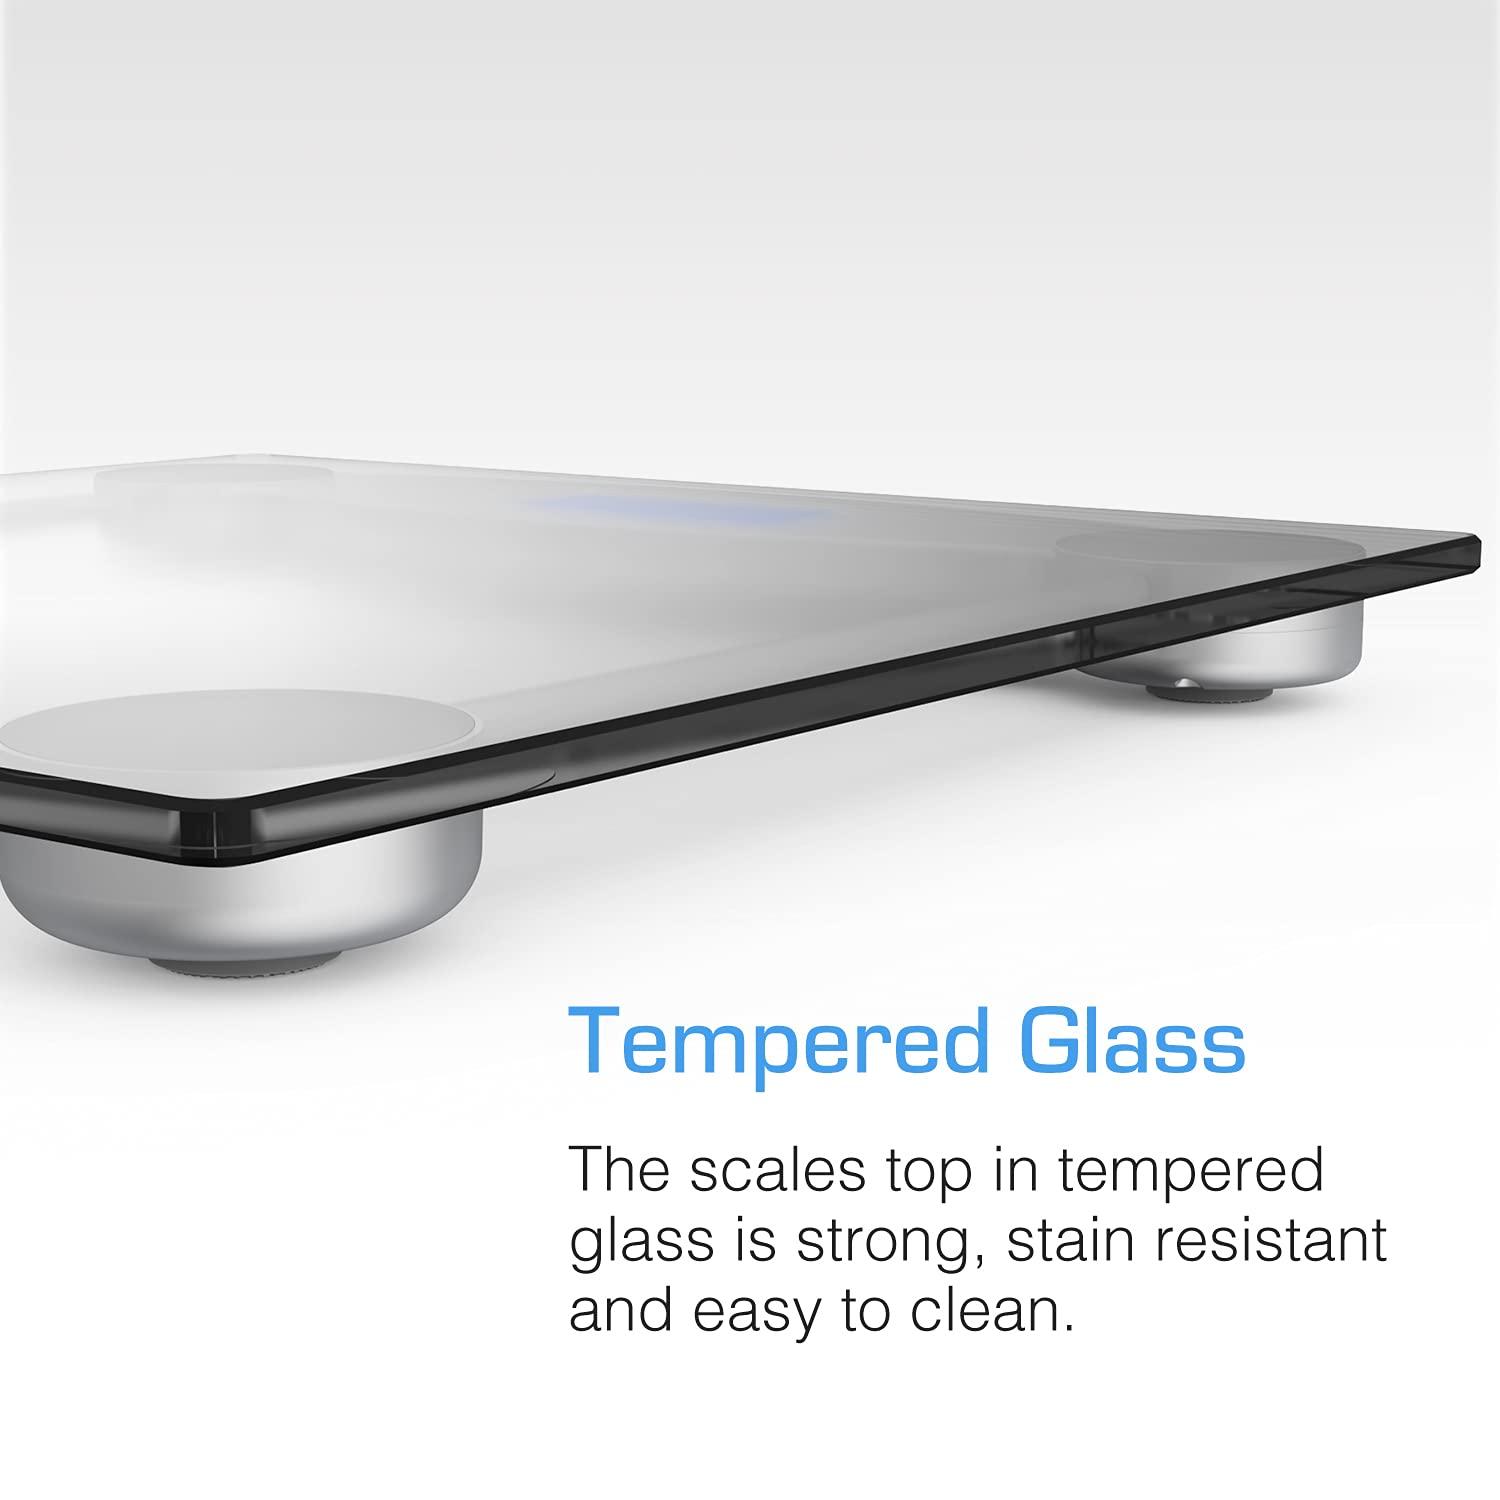 Digital Electronic Glass Bathroom Weight body Scale Scales Backlit 180kg  Gym